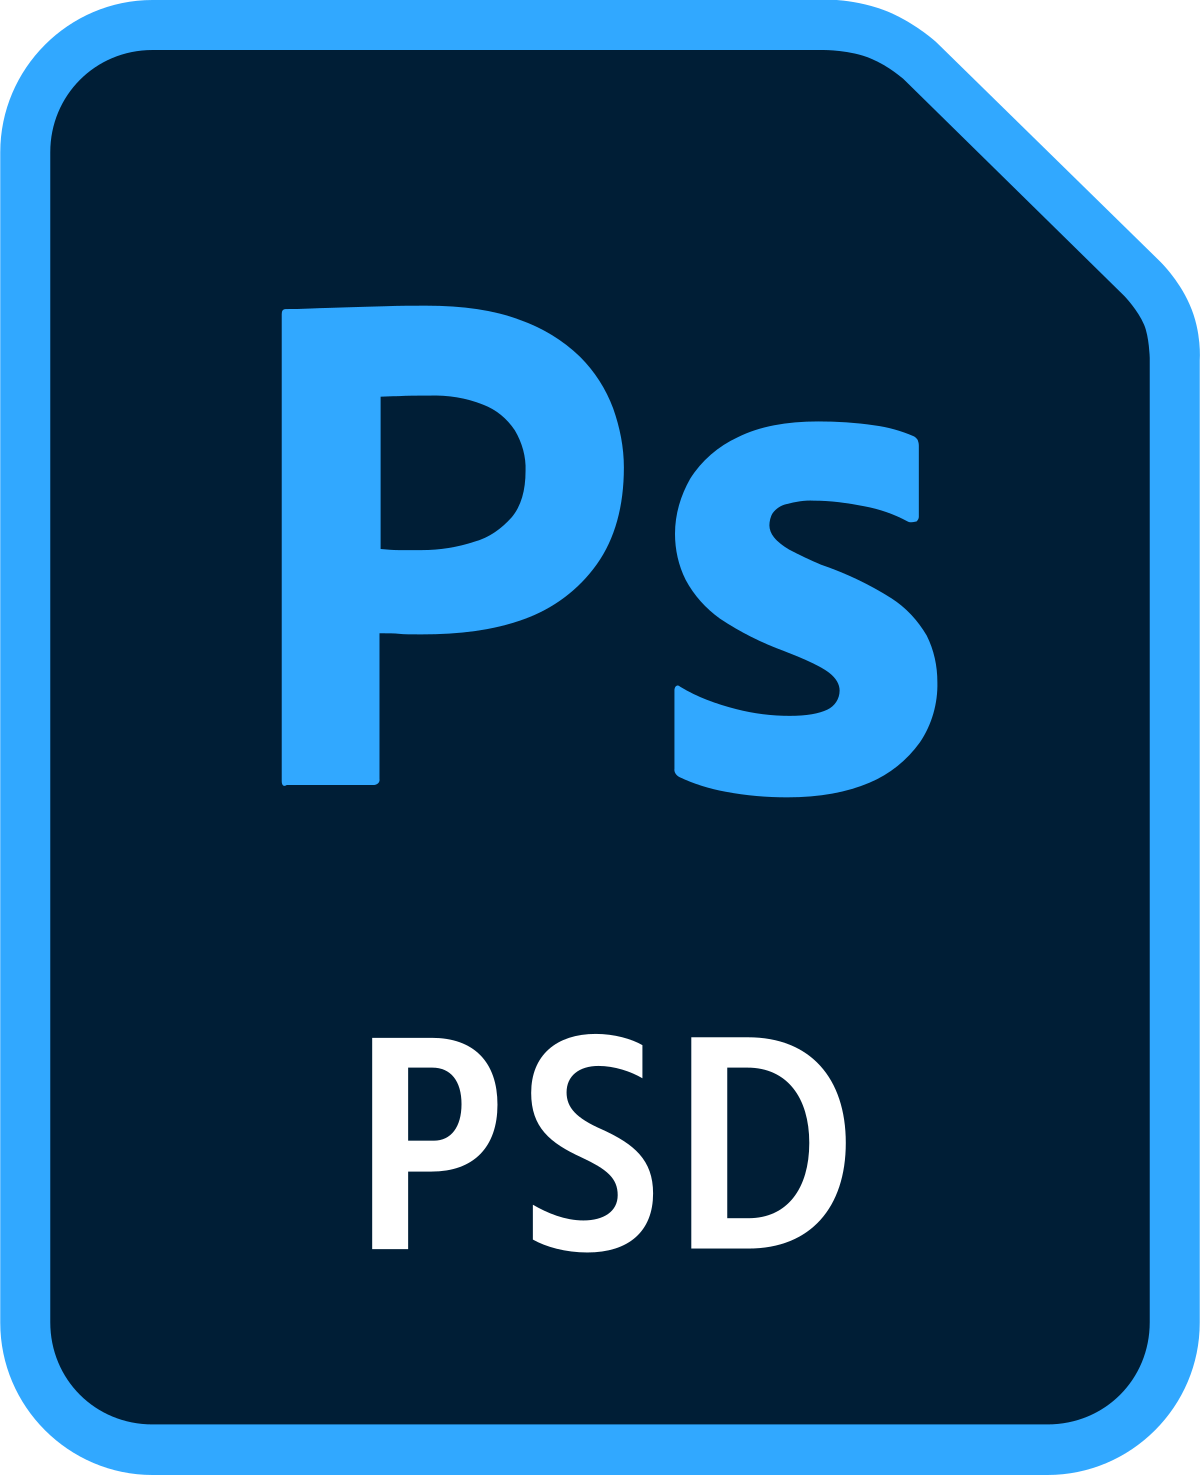 Расширение psd. ПСД файл. Формат значок. PSD файл. Иконка ПСД.